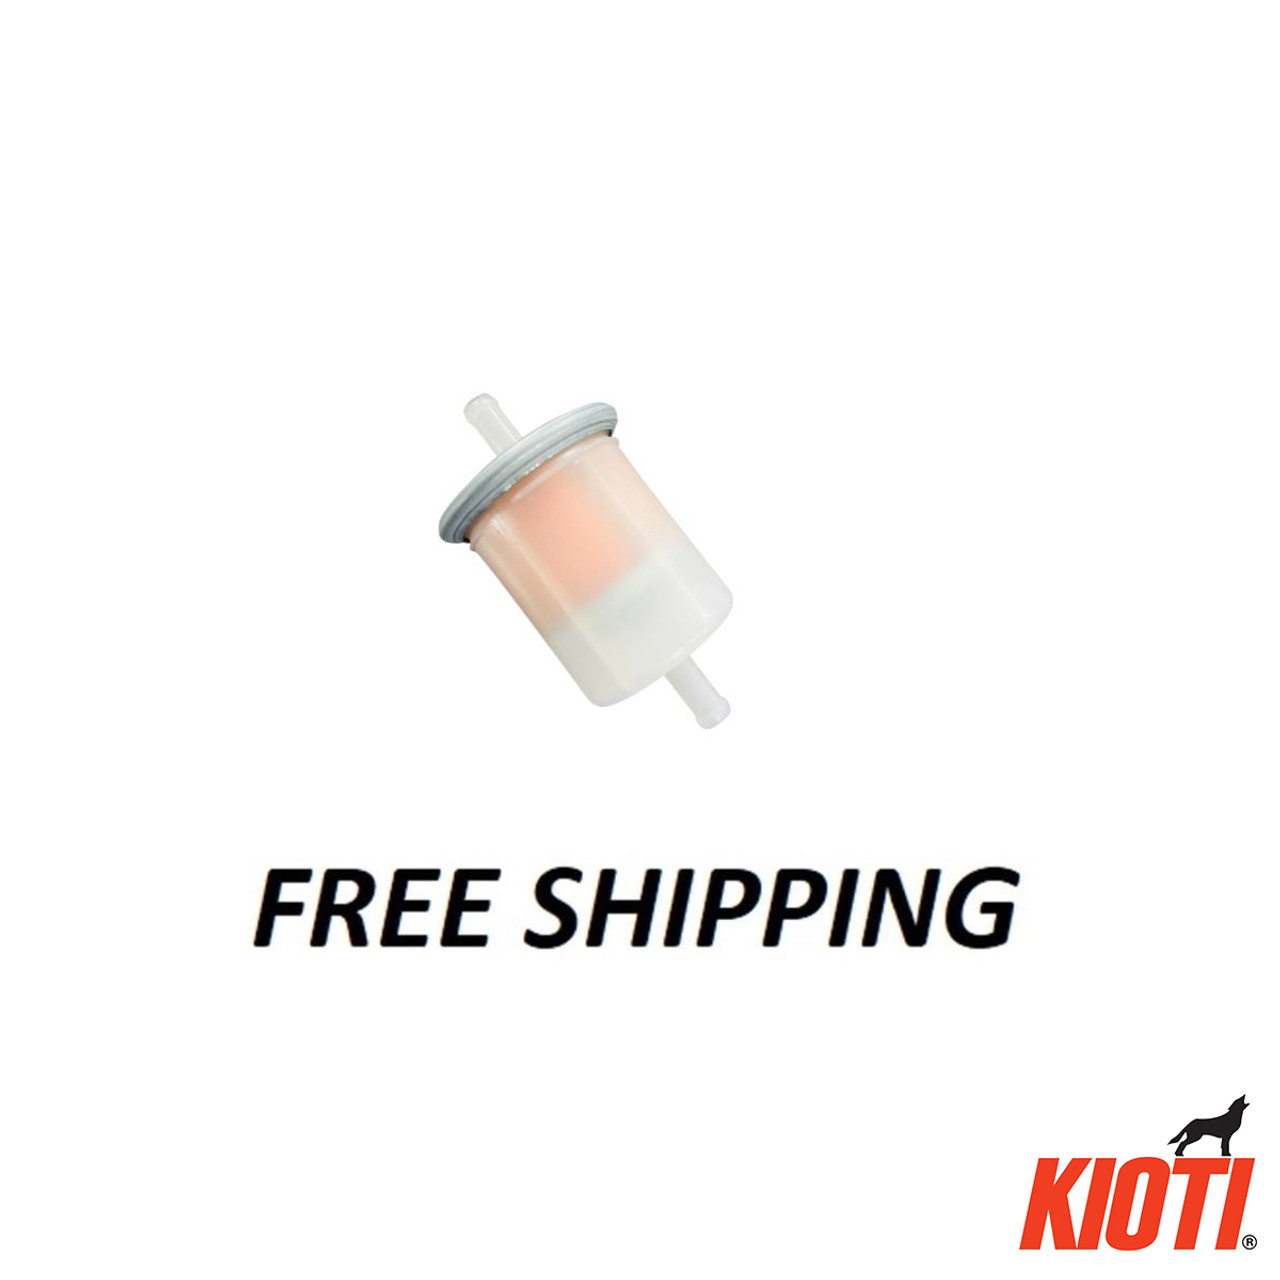 Kioti Fuel Filter for CS Series Tractor